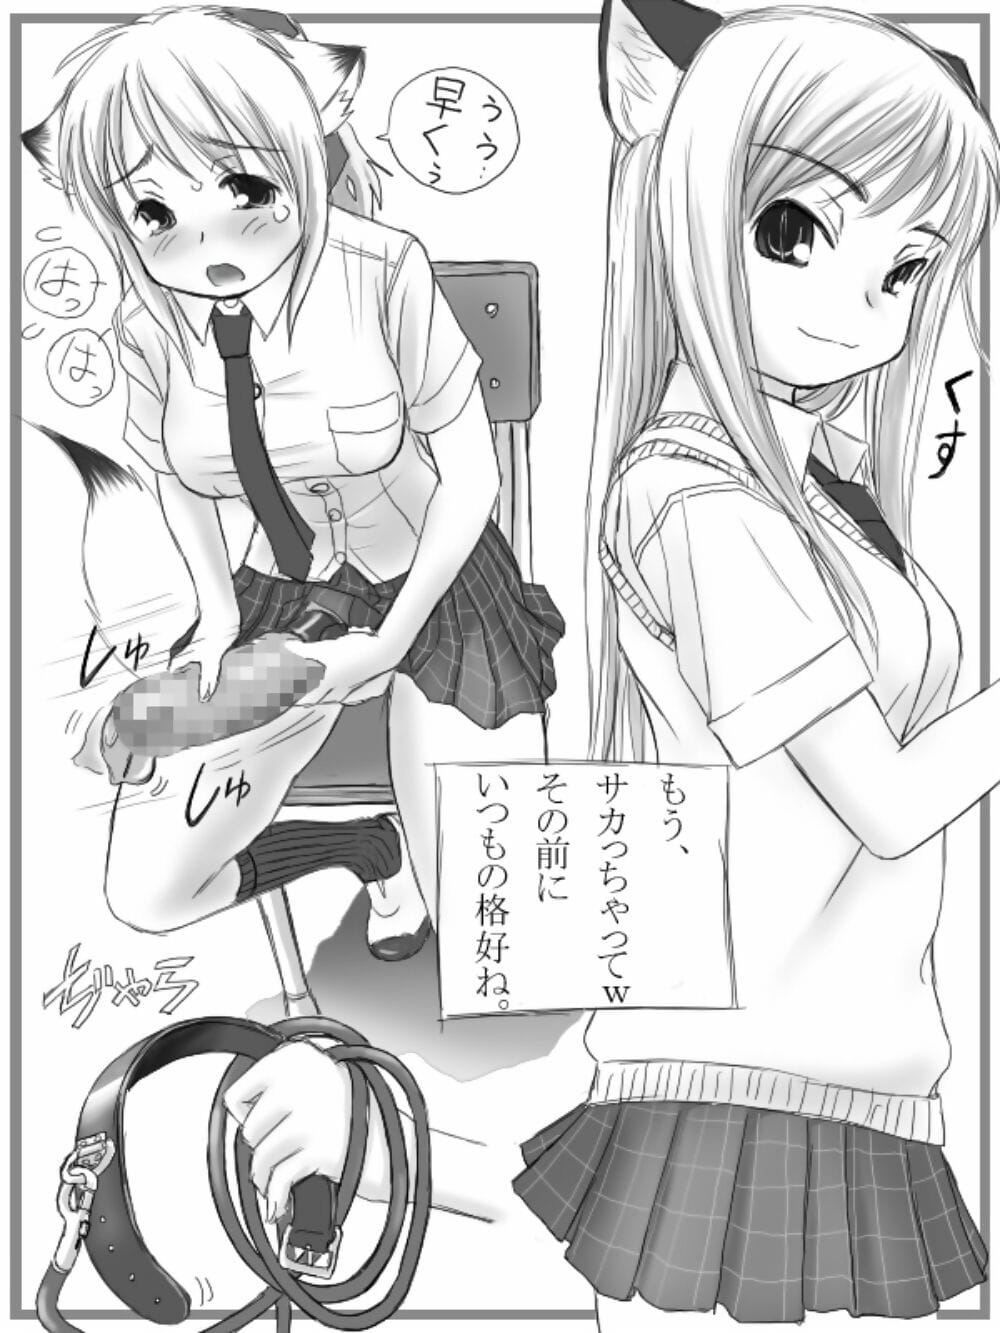 mui garou mui Futanari san ilustração shuu + omake mangá digital parte 3